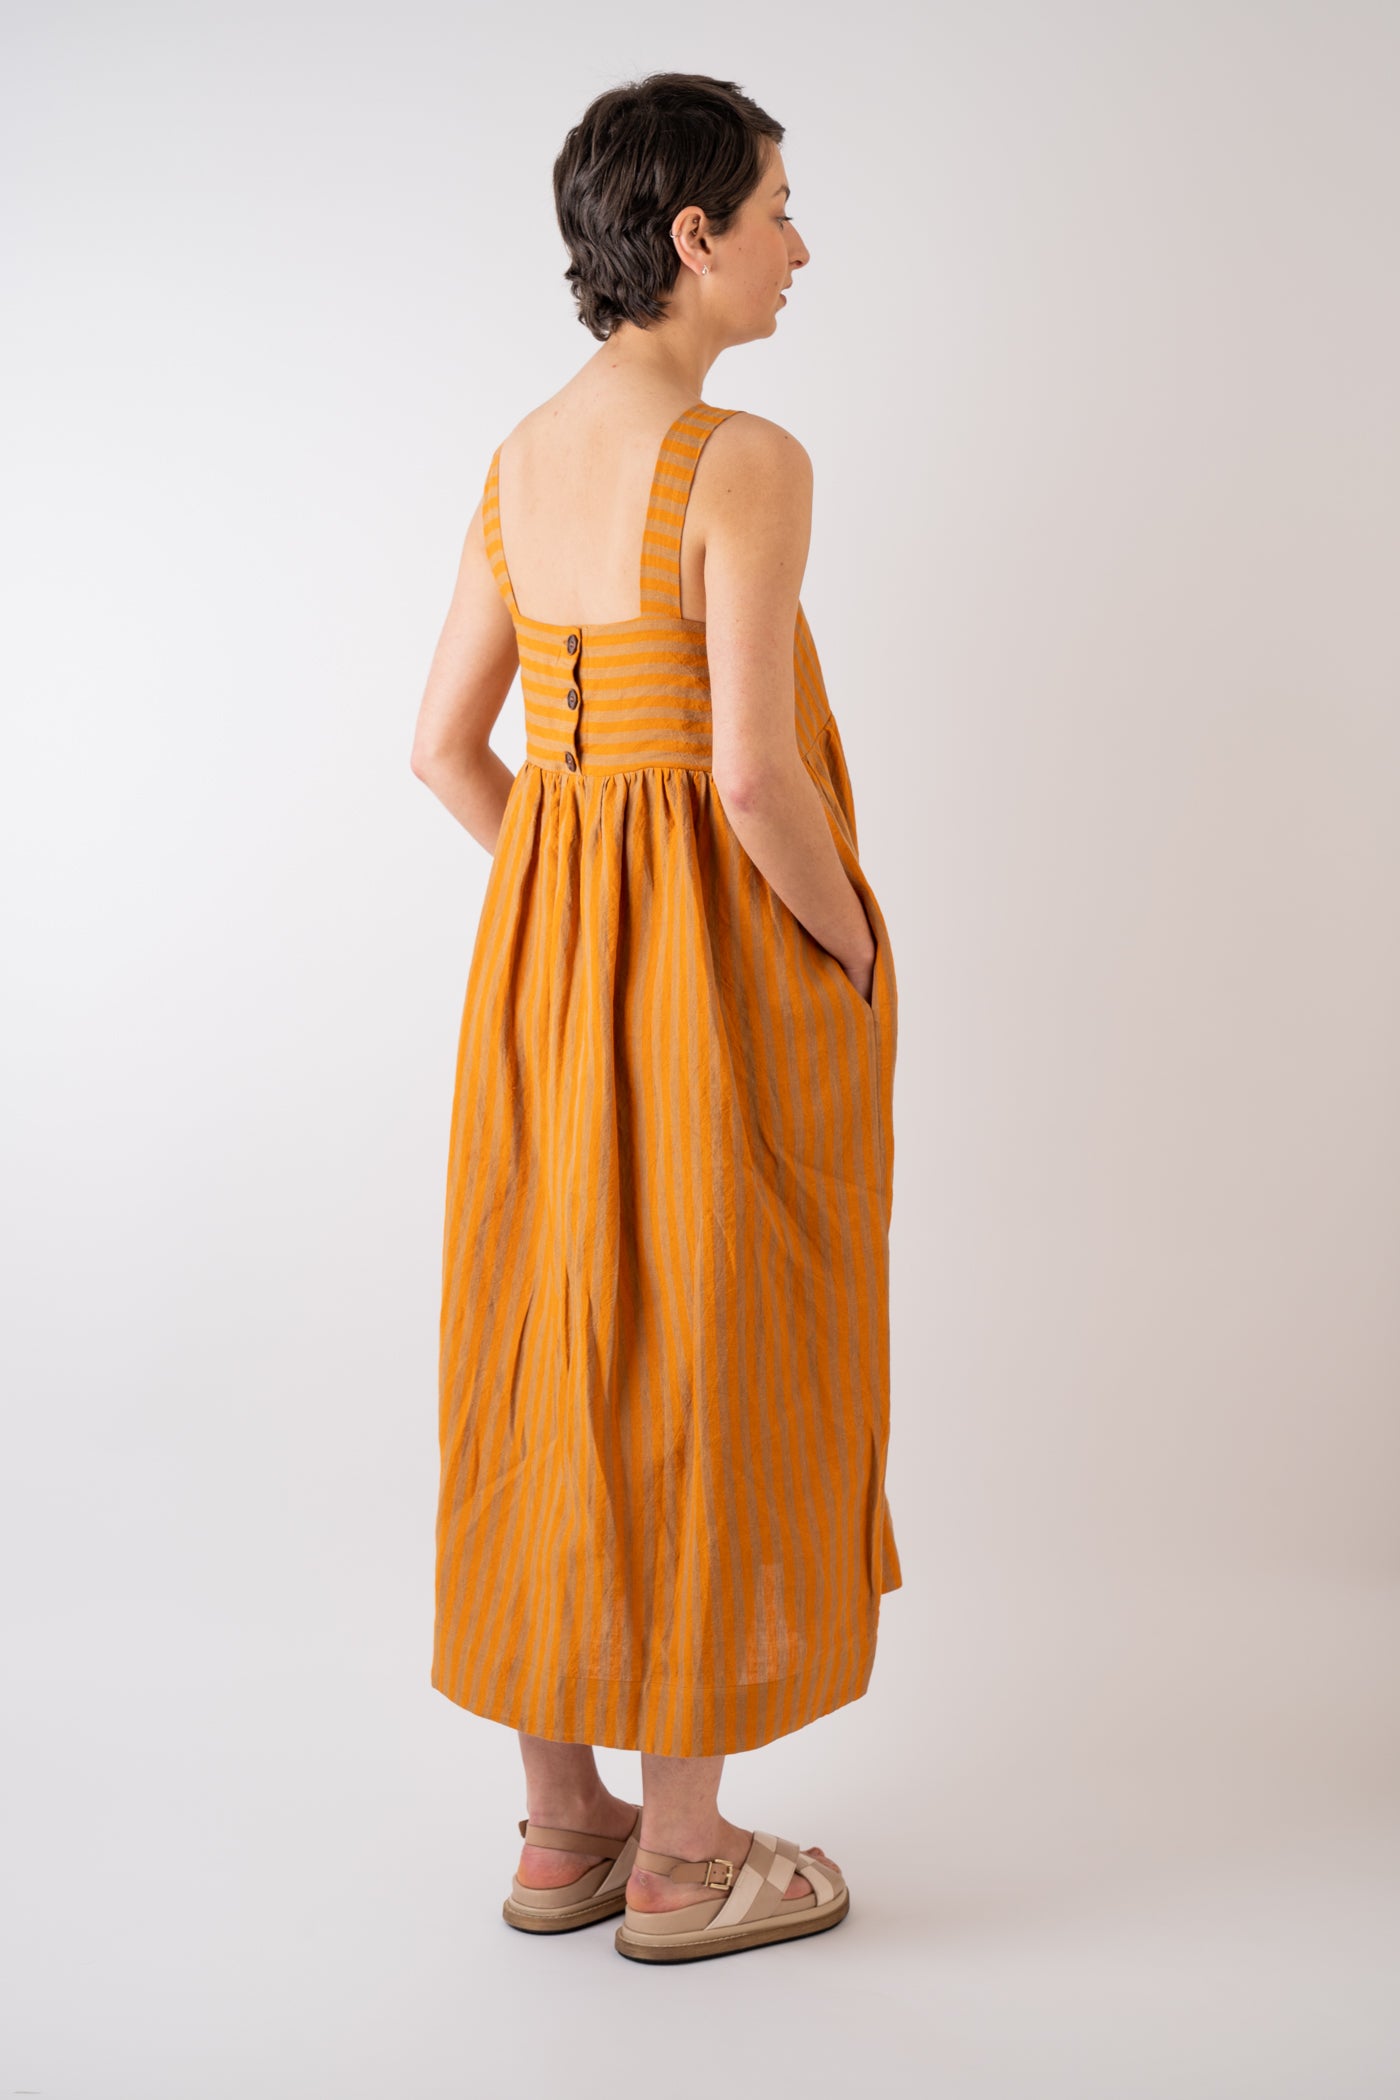 Cawley Studio 100% Irish Stripe Linen Elba Dress in Orange and Terracotta handmade in London with coroza button back fastening detail